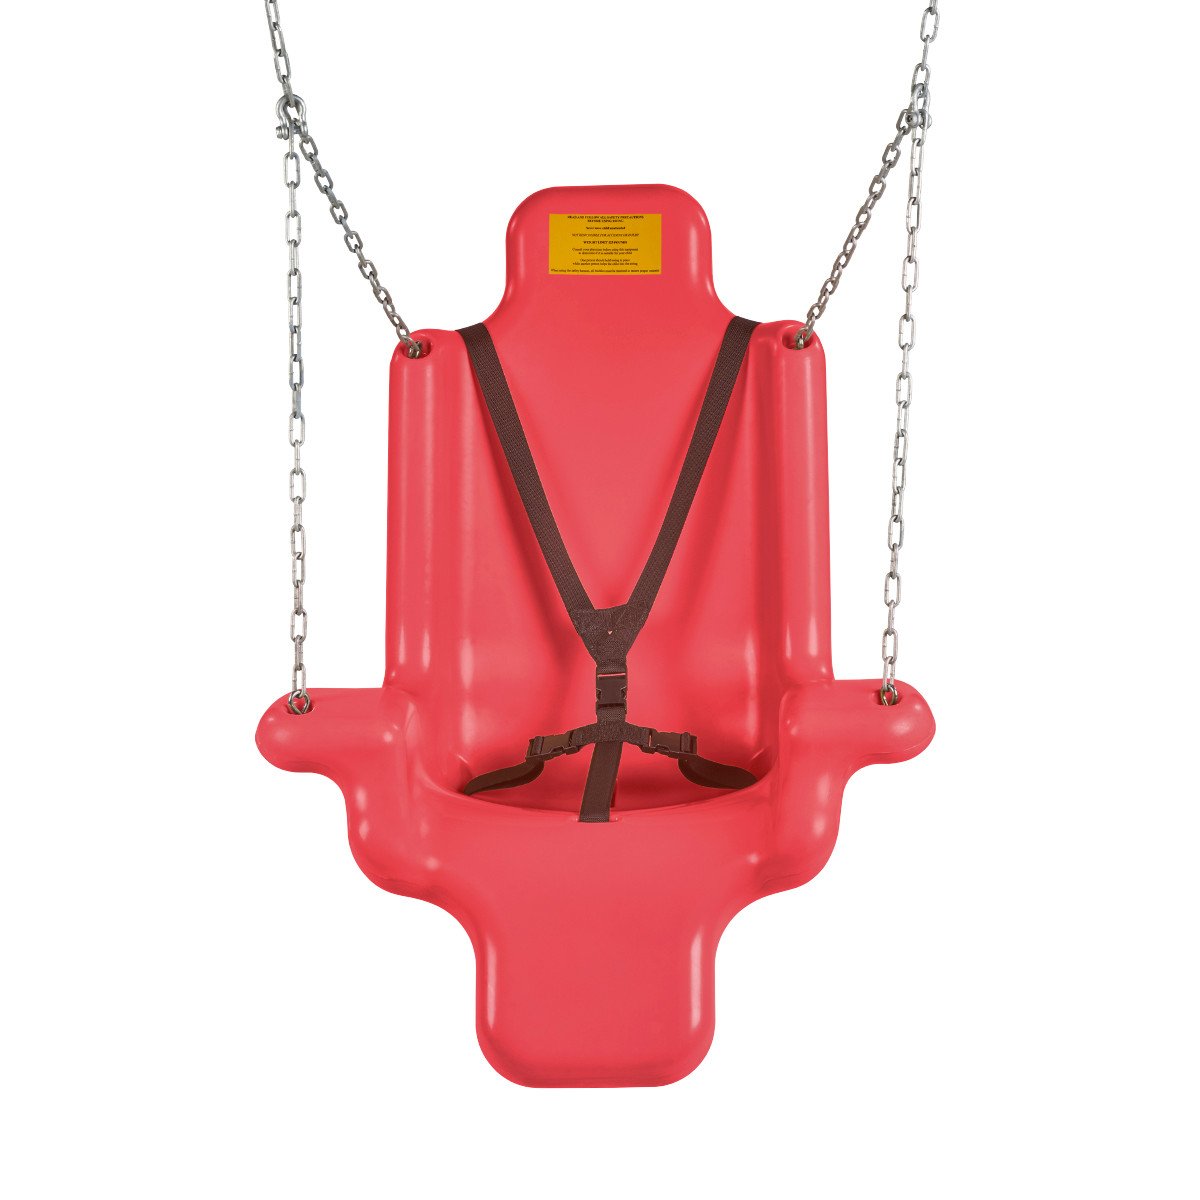 Adaptive Swing Seat (ADP-10) - Red